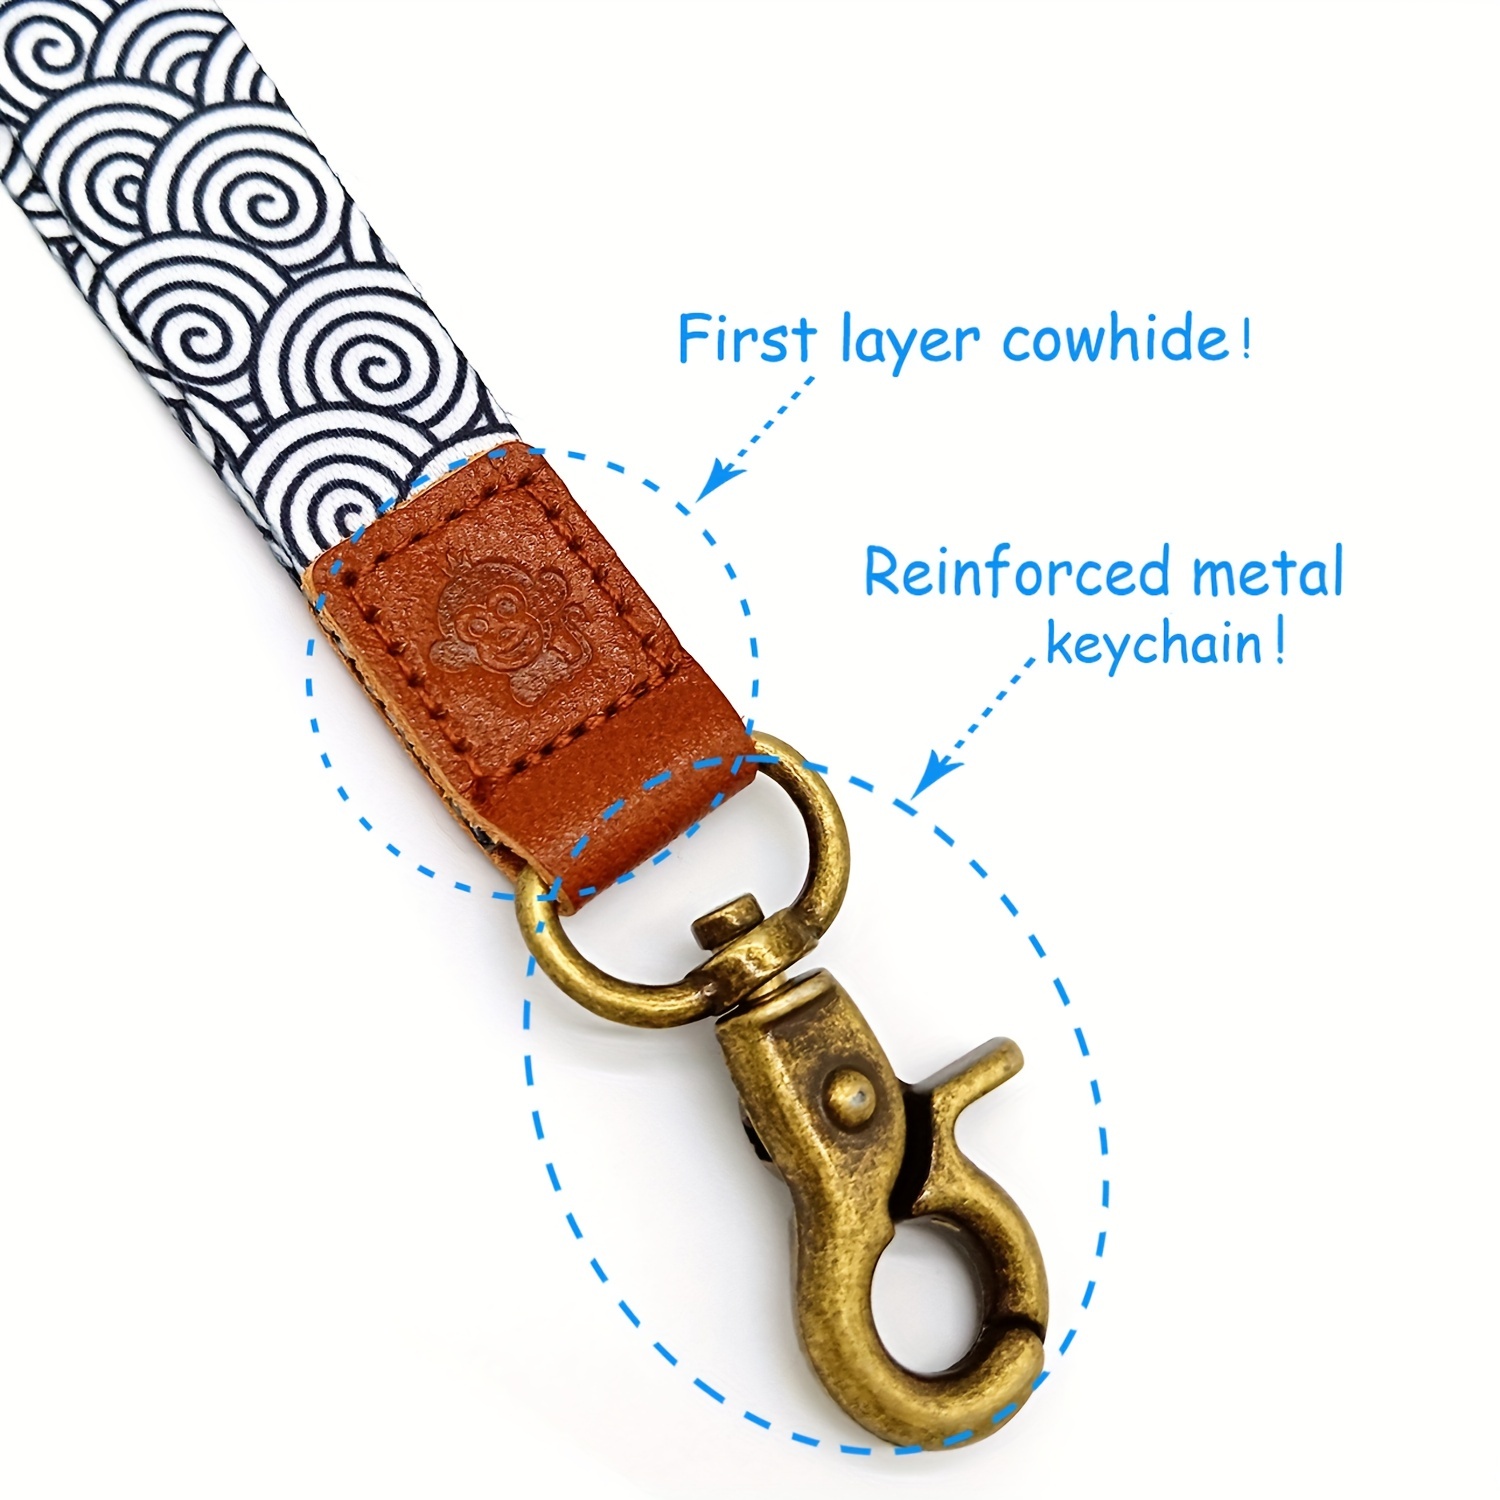  Yiflin Cute Wrist Lanyard for Keys, Keychain, Wallet